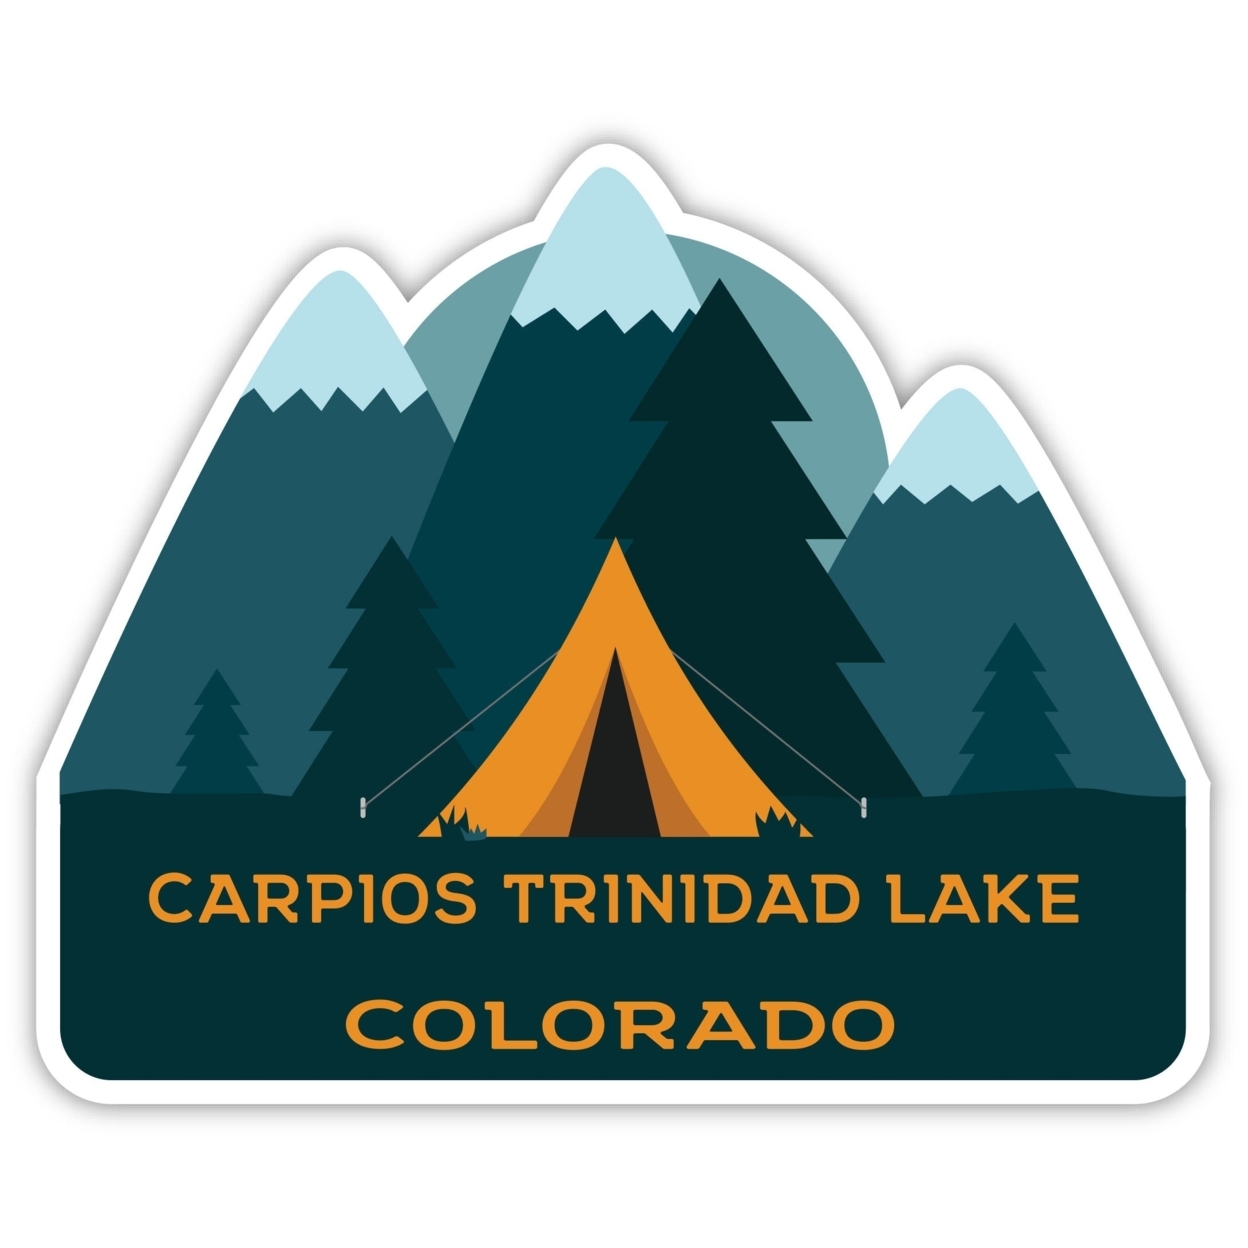 Carpios Trinidad Lake Colorado Souvenir Decorative Stickers (Choose Theme And Size) - Single Unit, 12-Inch, Tent